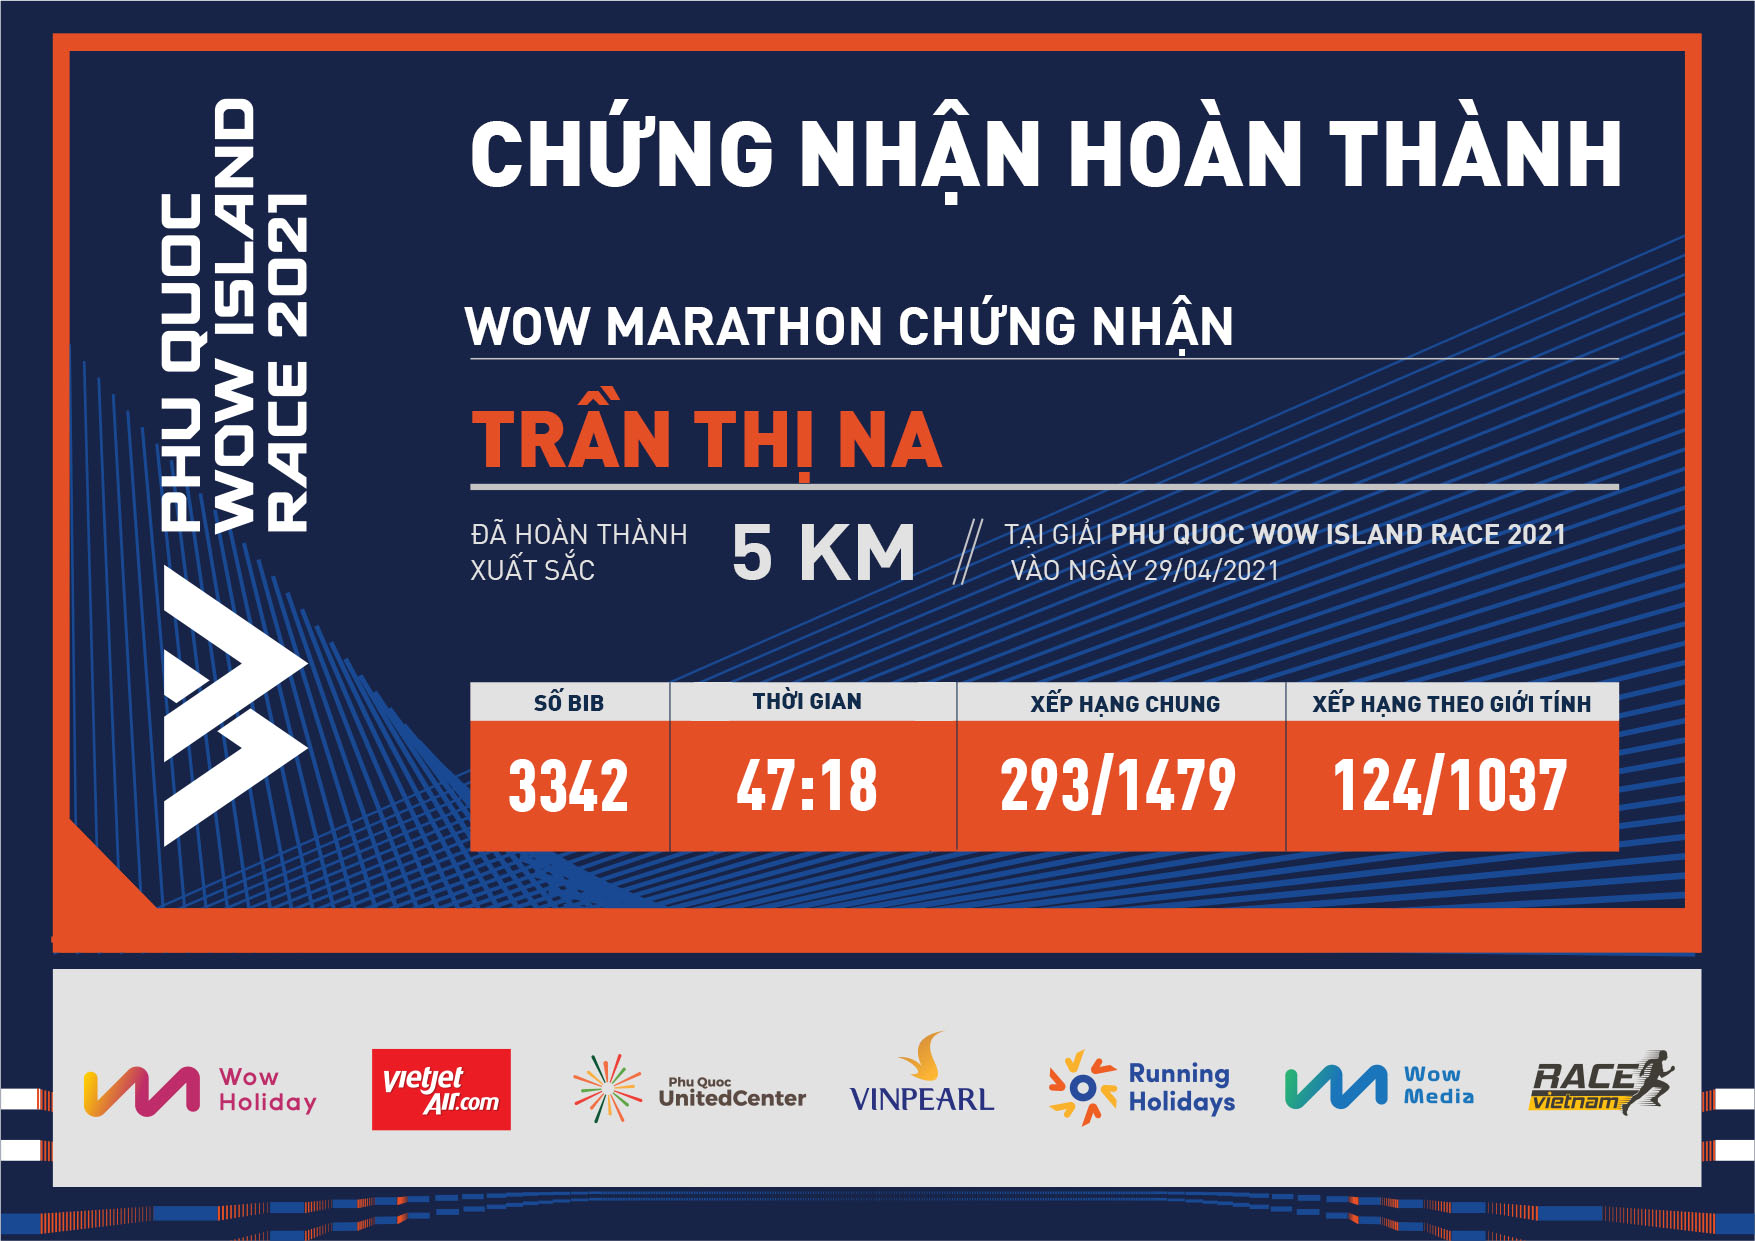 3342 - Trần Thị Na